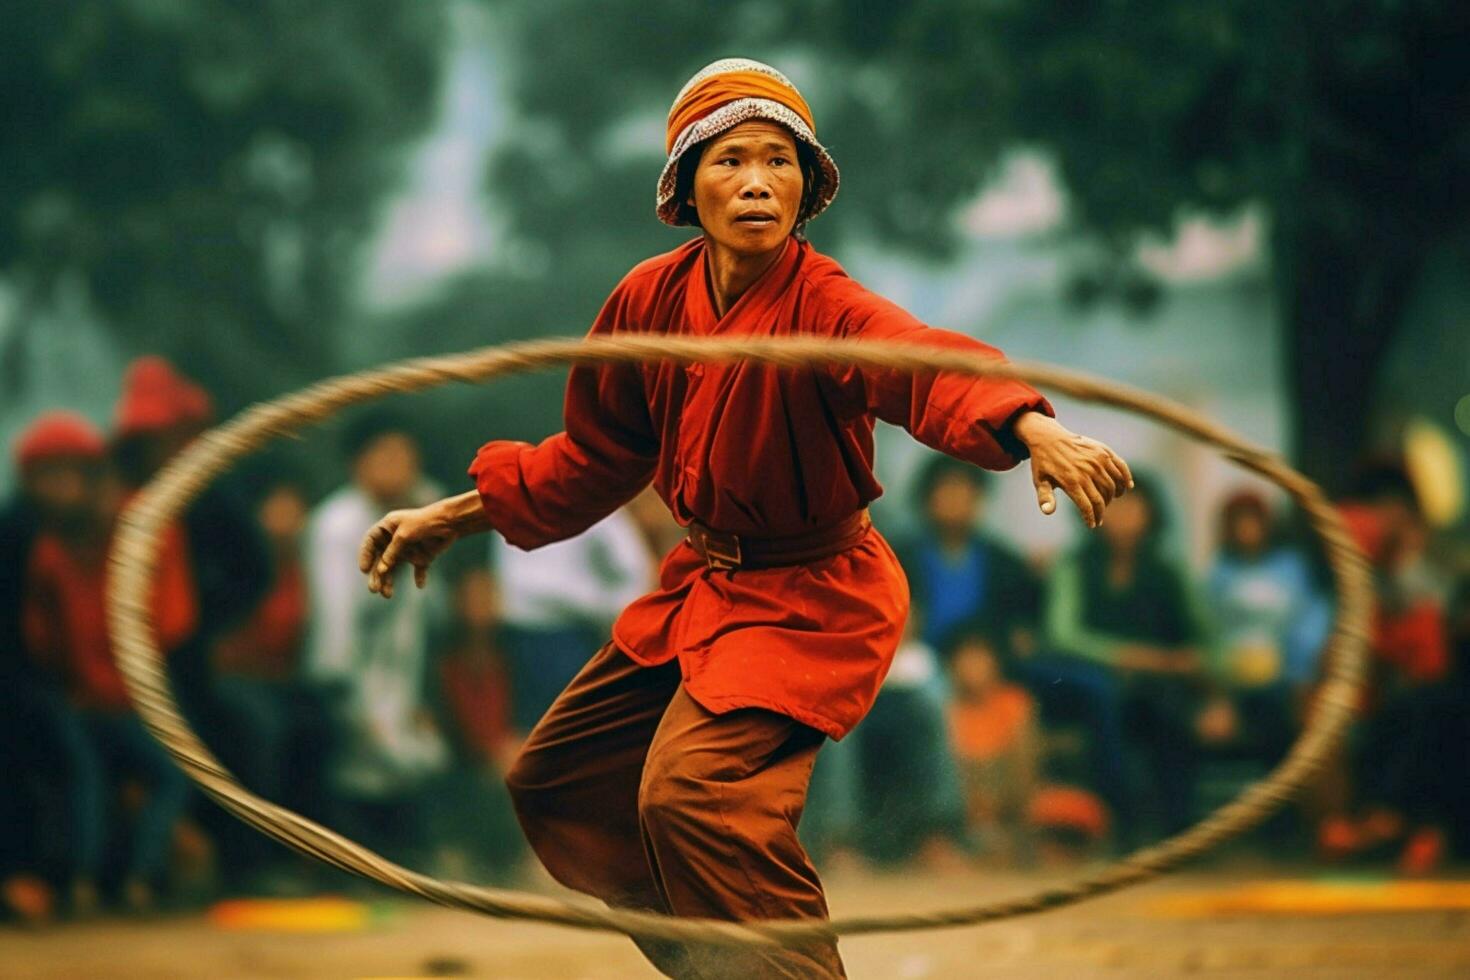 national sport of Vietnam photo